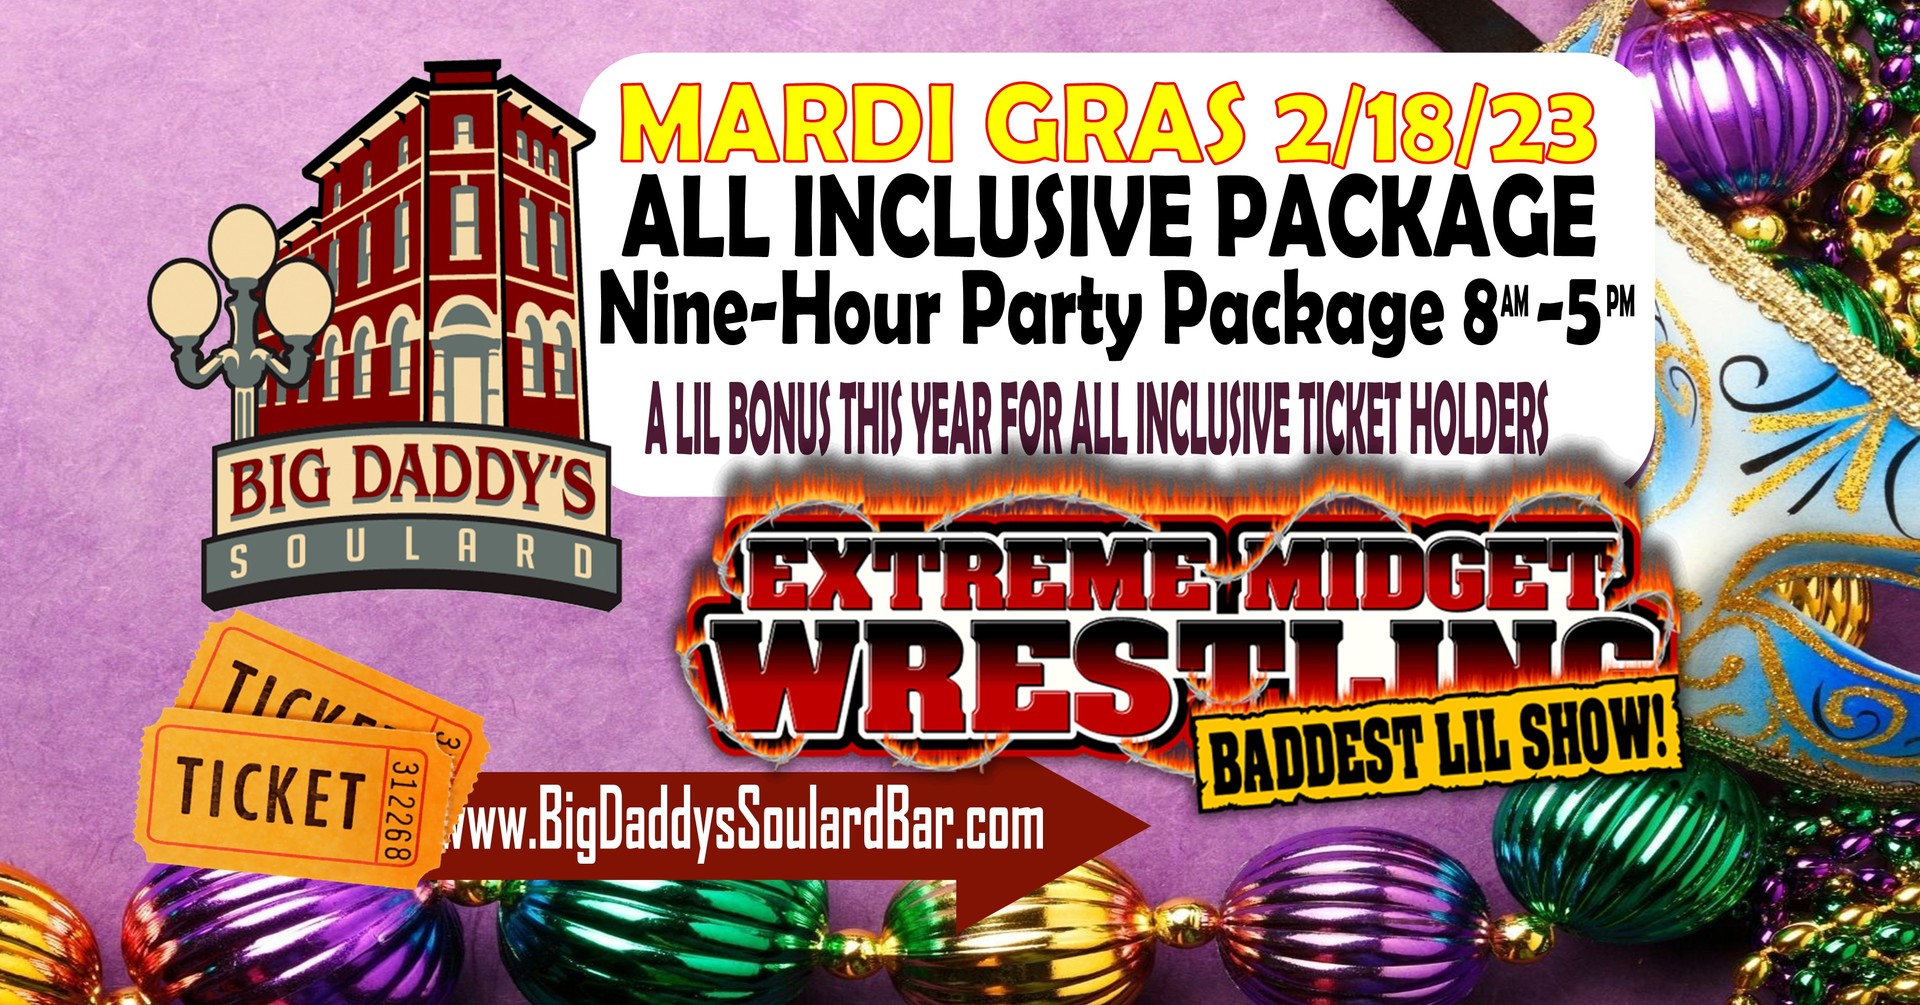 Big Daddy's Soulard Mardi Gras All-Inclusive Tickets feat. EXTREME DWARFANATORS WRESTLING, Saint Louis, Missouri, United States